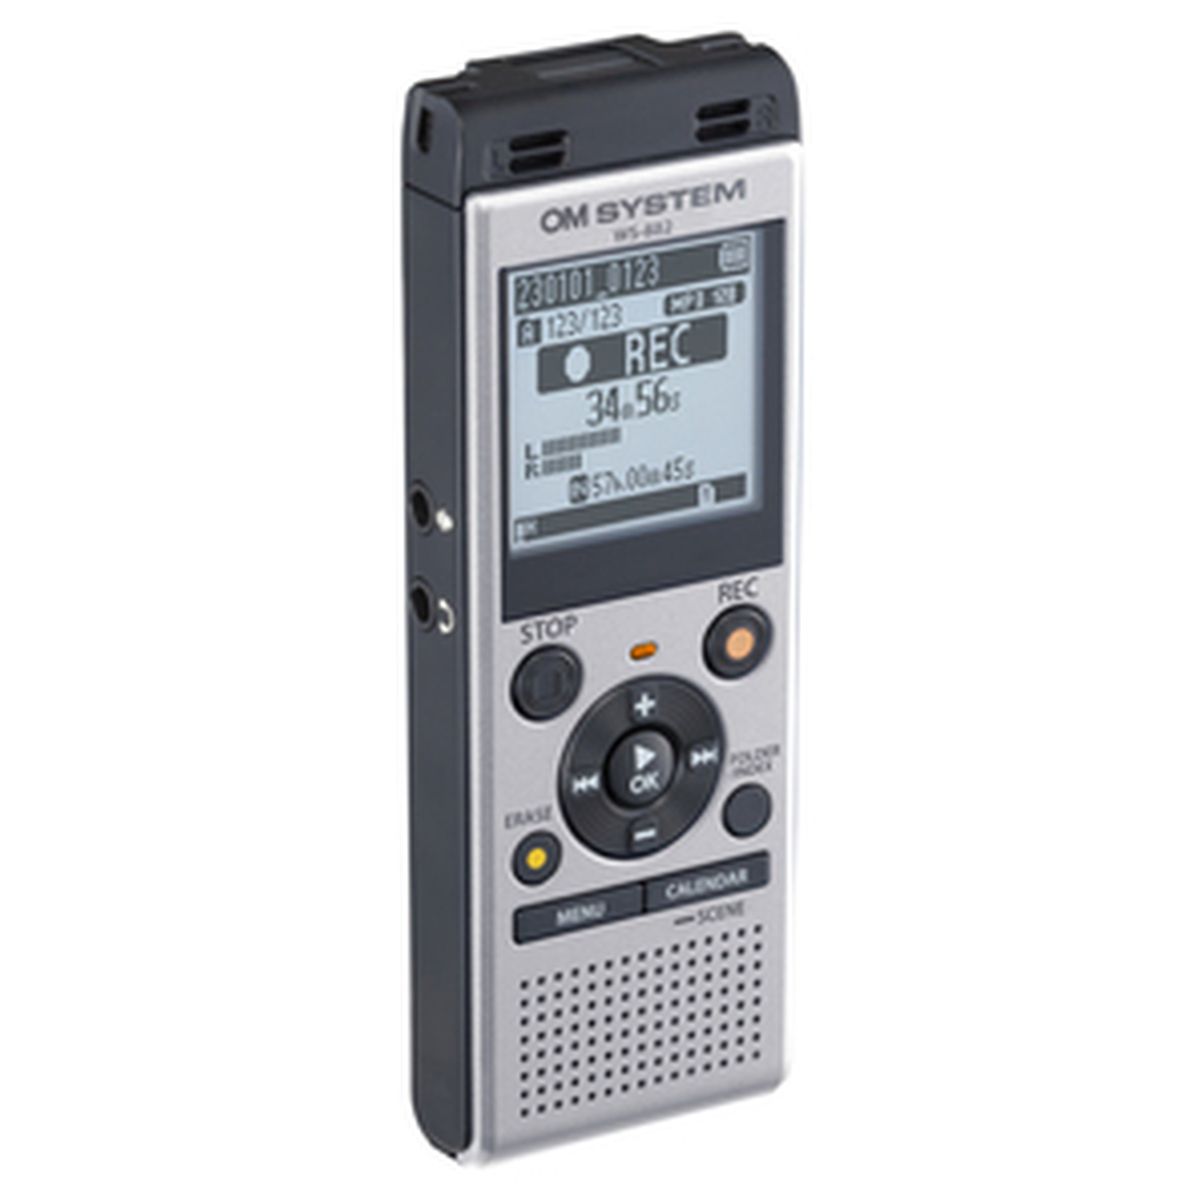 OM System WS-882 (4 GB) Multifunktions-Stereorekorder Silber